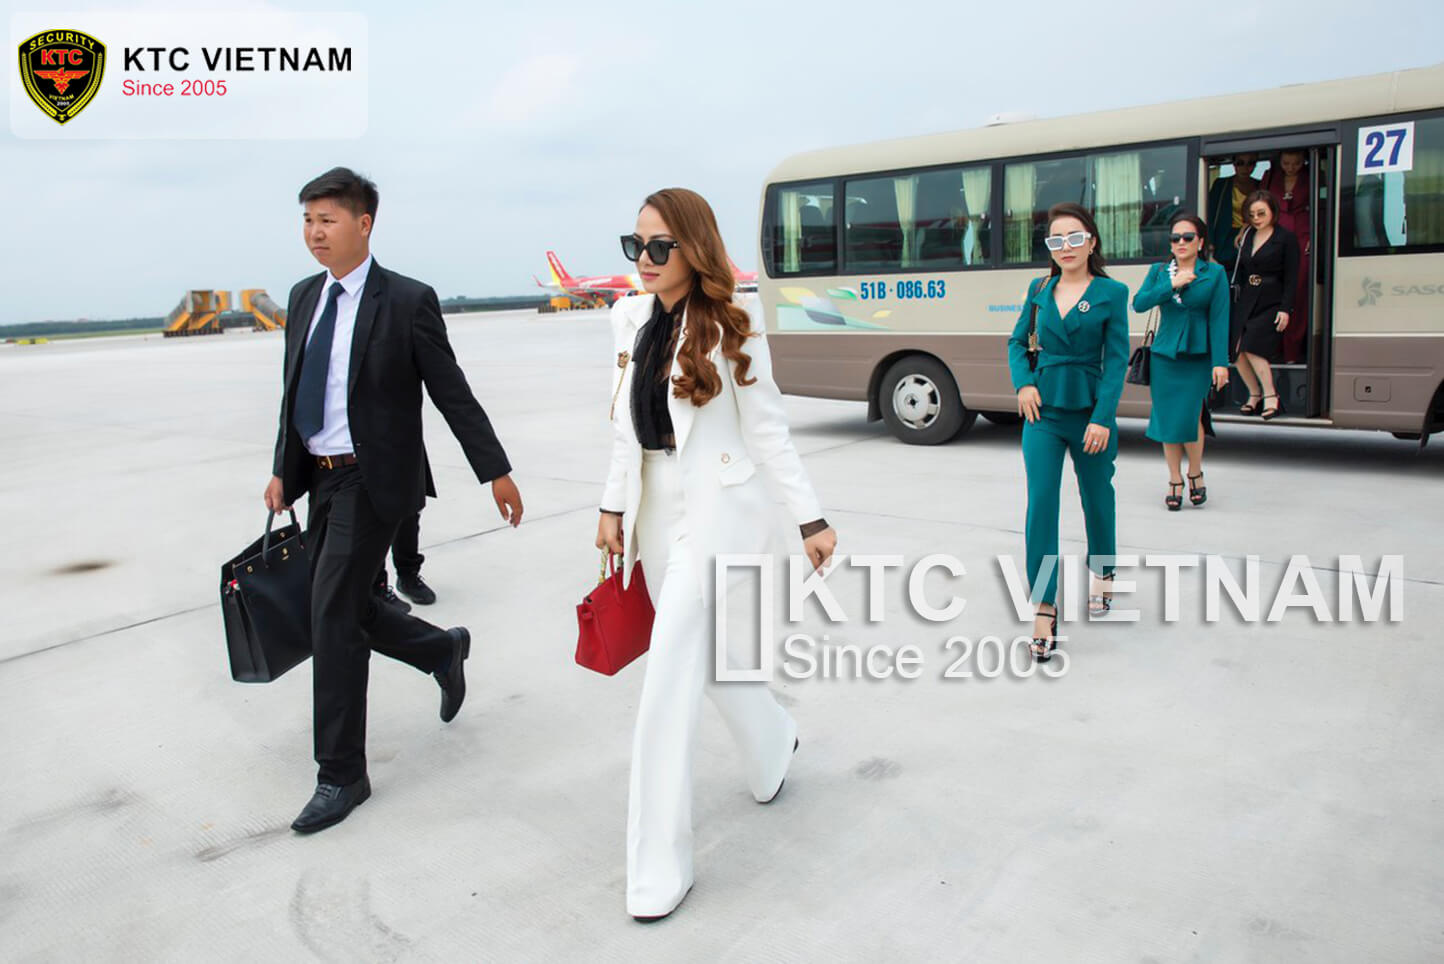 Hire Personal Bodyguard in Vietnam